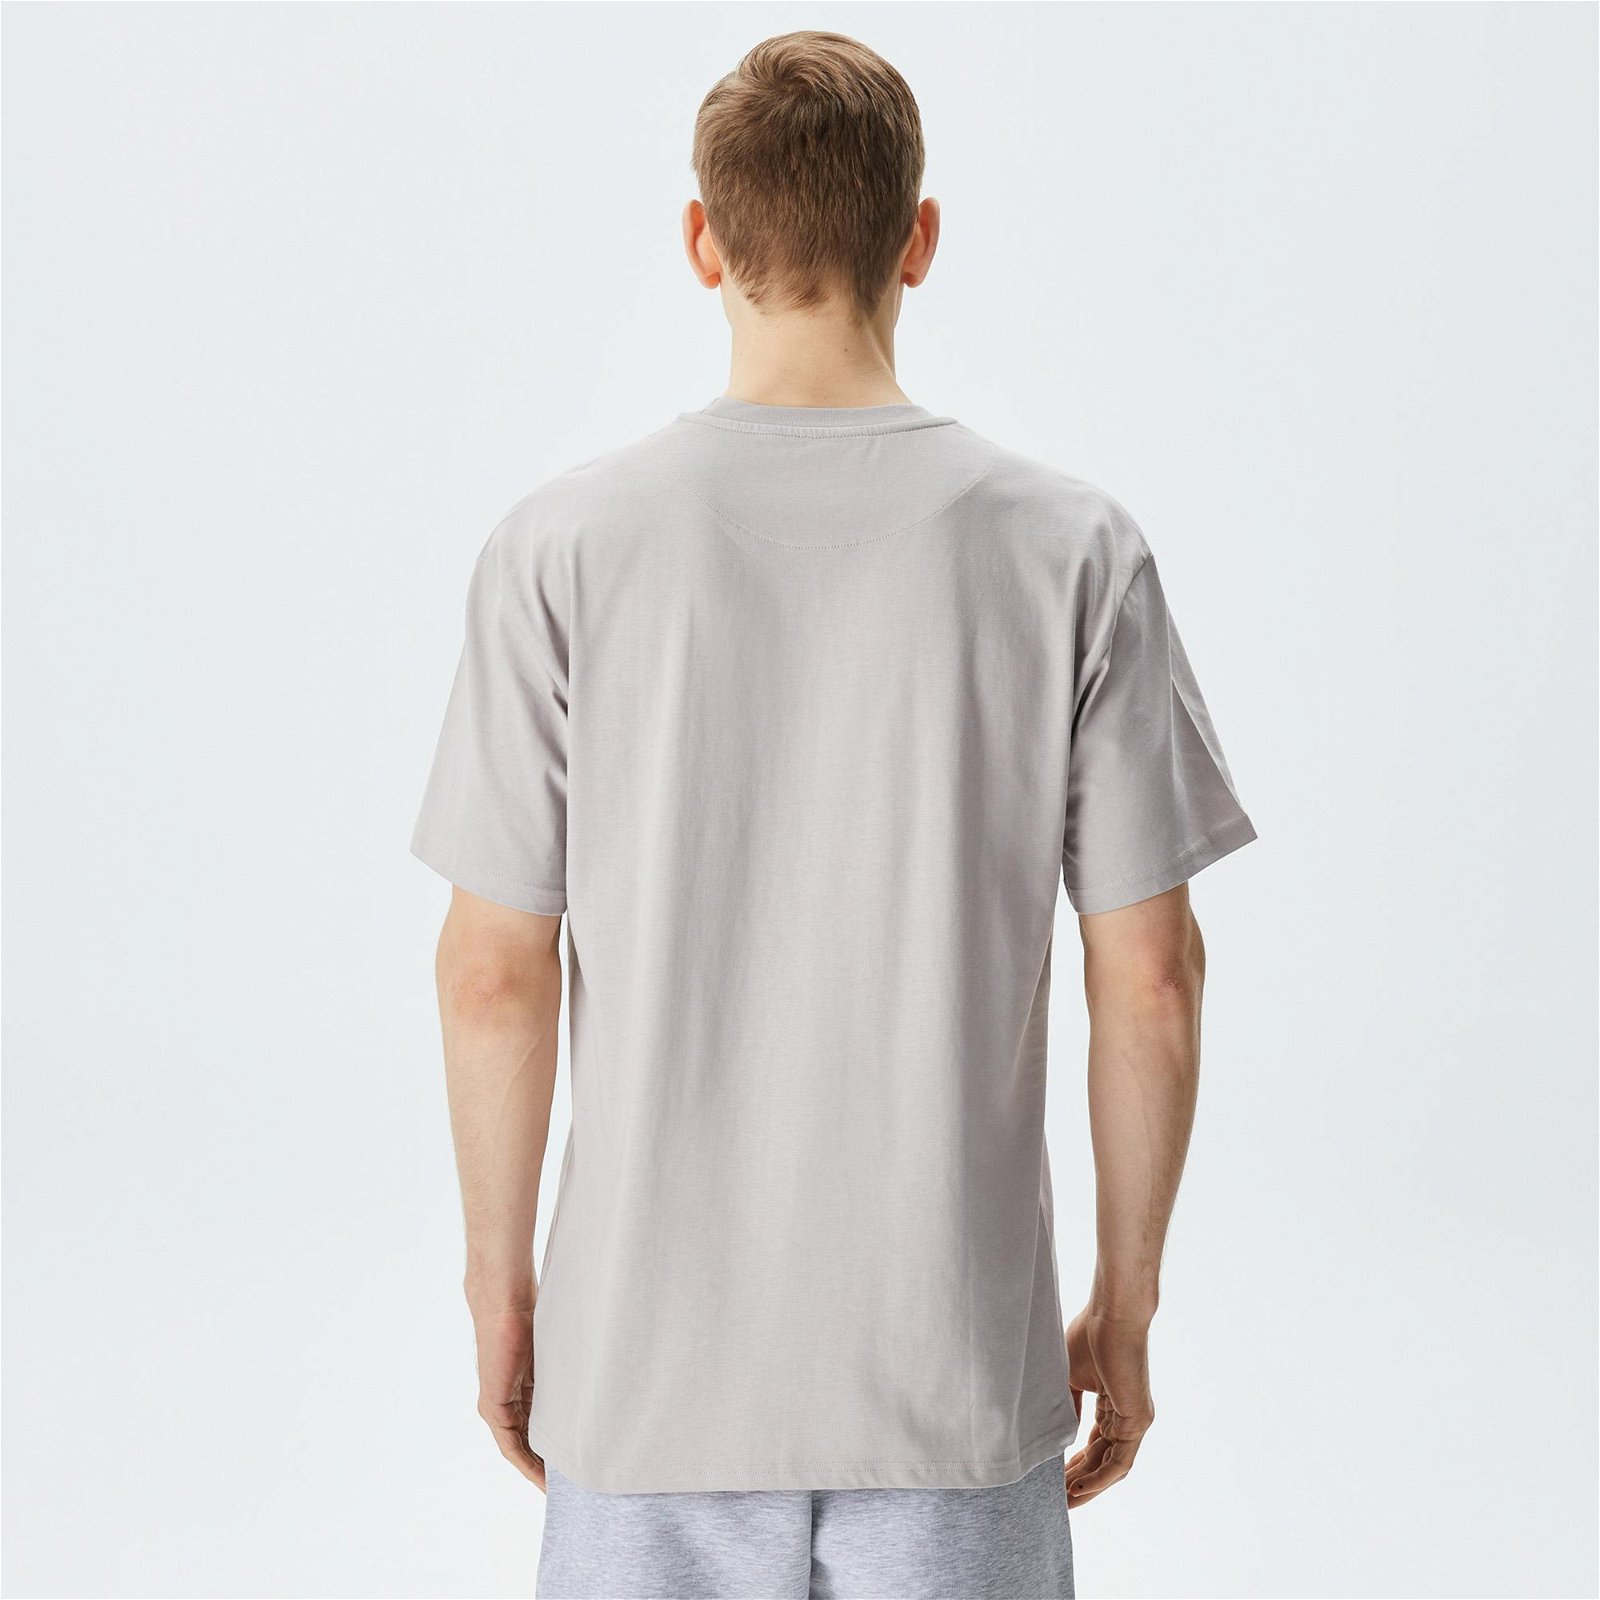 Karl Kani Small Signature Essential Erkek Gri T-Shirt